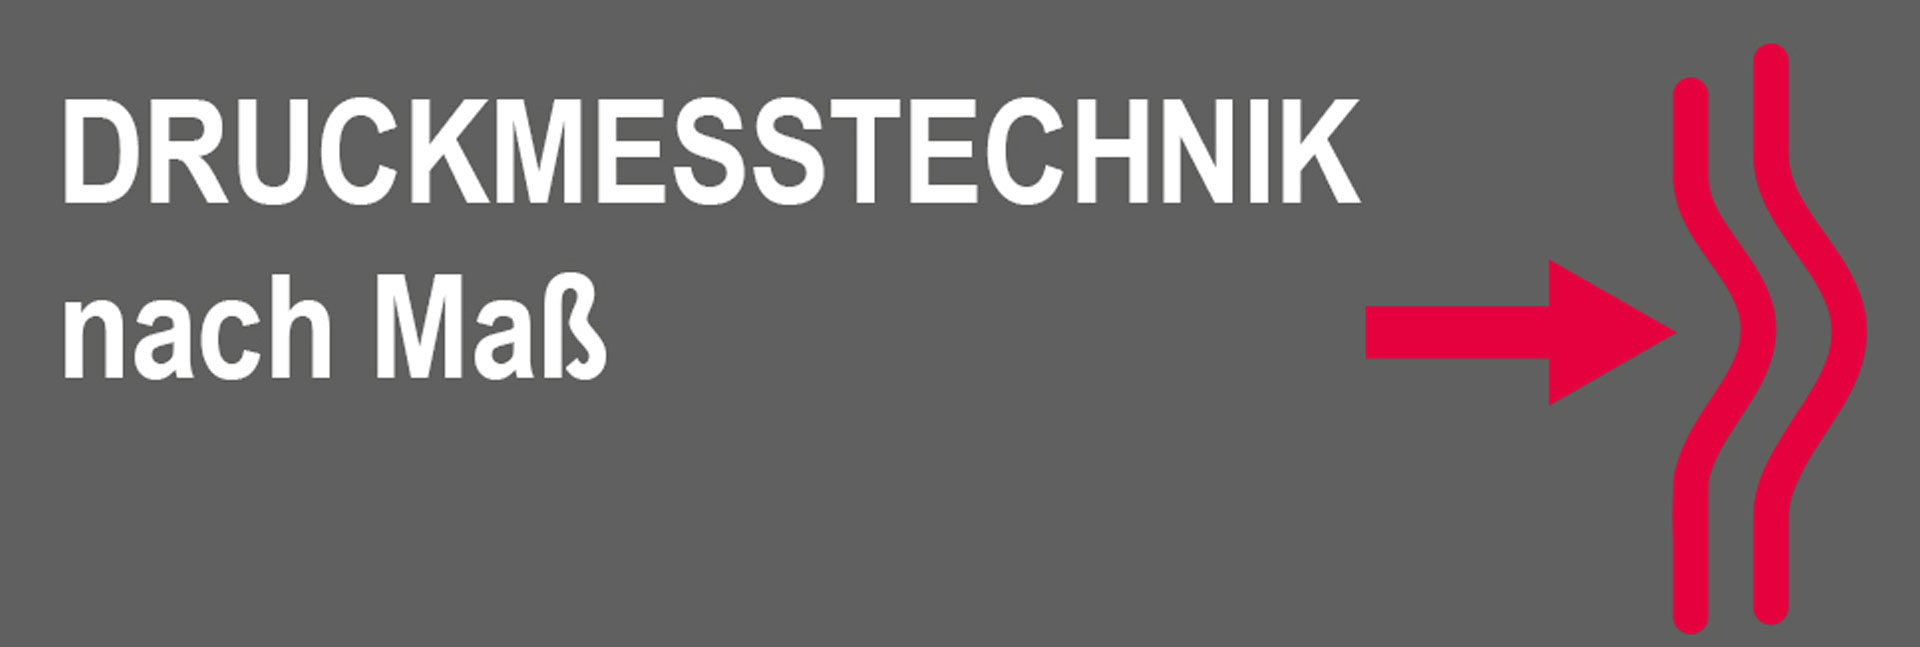 B+B Thermo-Technik Messtechnik & Sensorik | Measurement technology & sensors | Druckmesstechnik